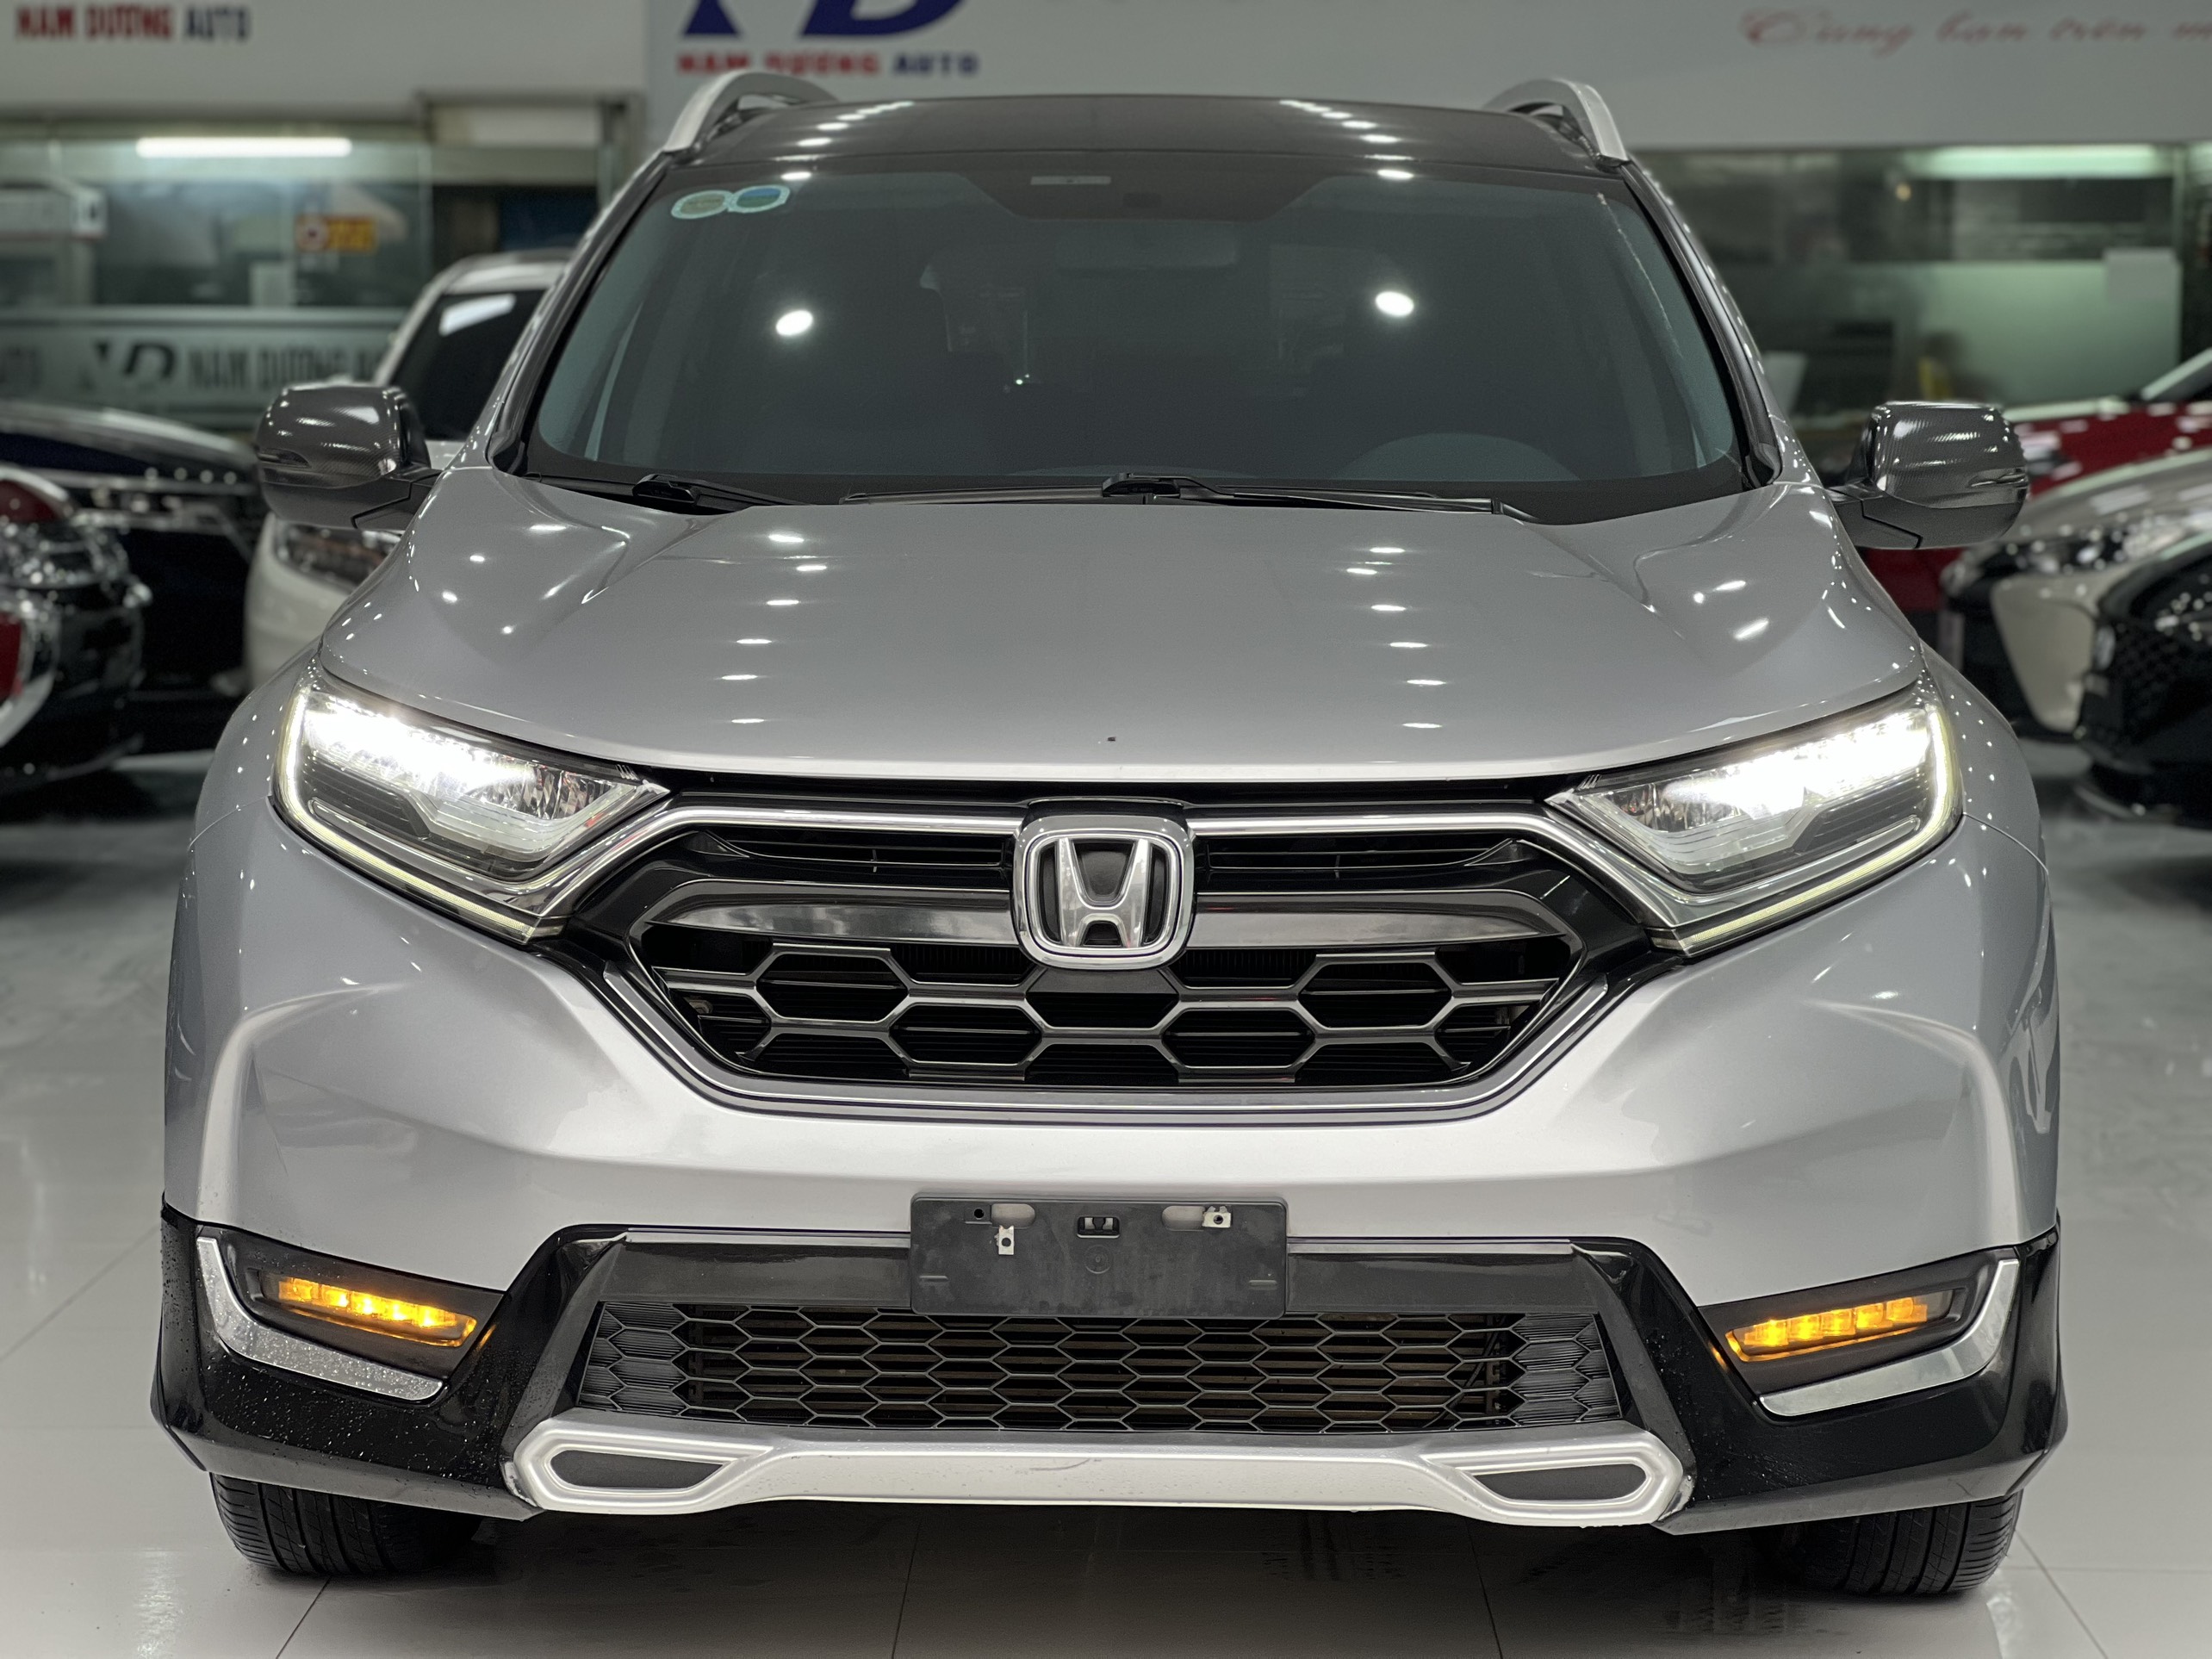 Honda CRV 1.5 G model 2018